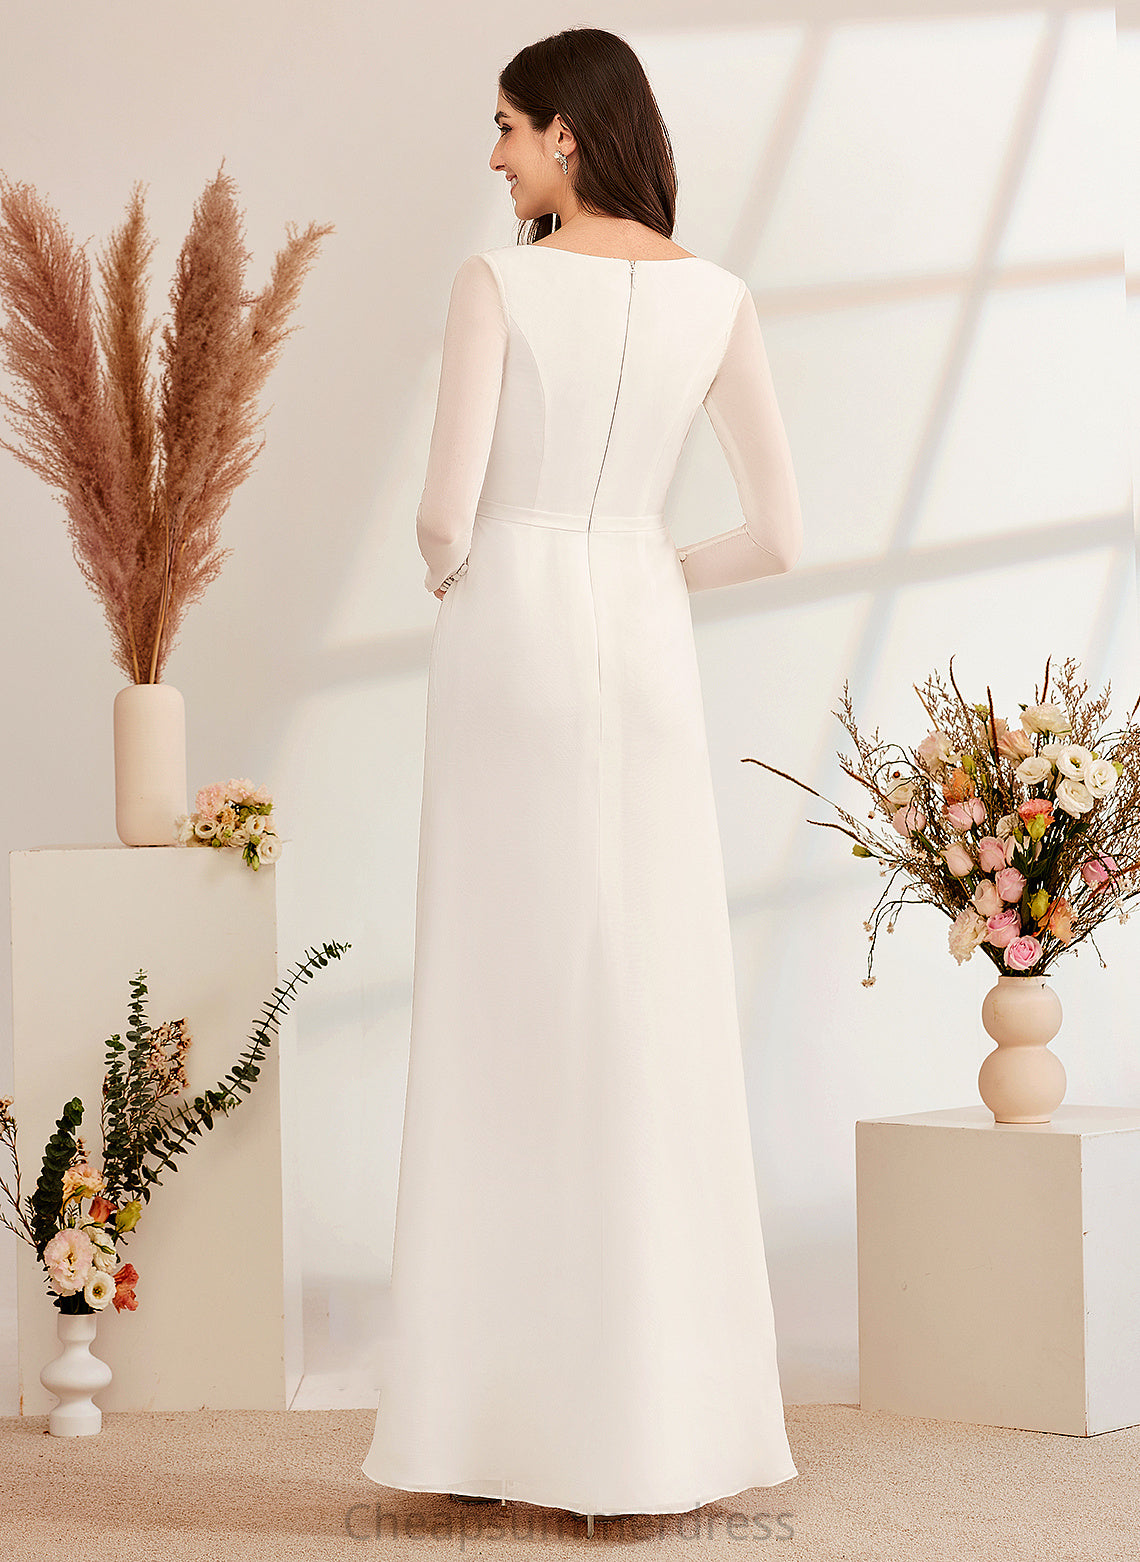 With Wedding Dresses A-Line Dress Lace Luciana V-neck Floor-Length Bow(s) Wedding